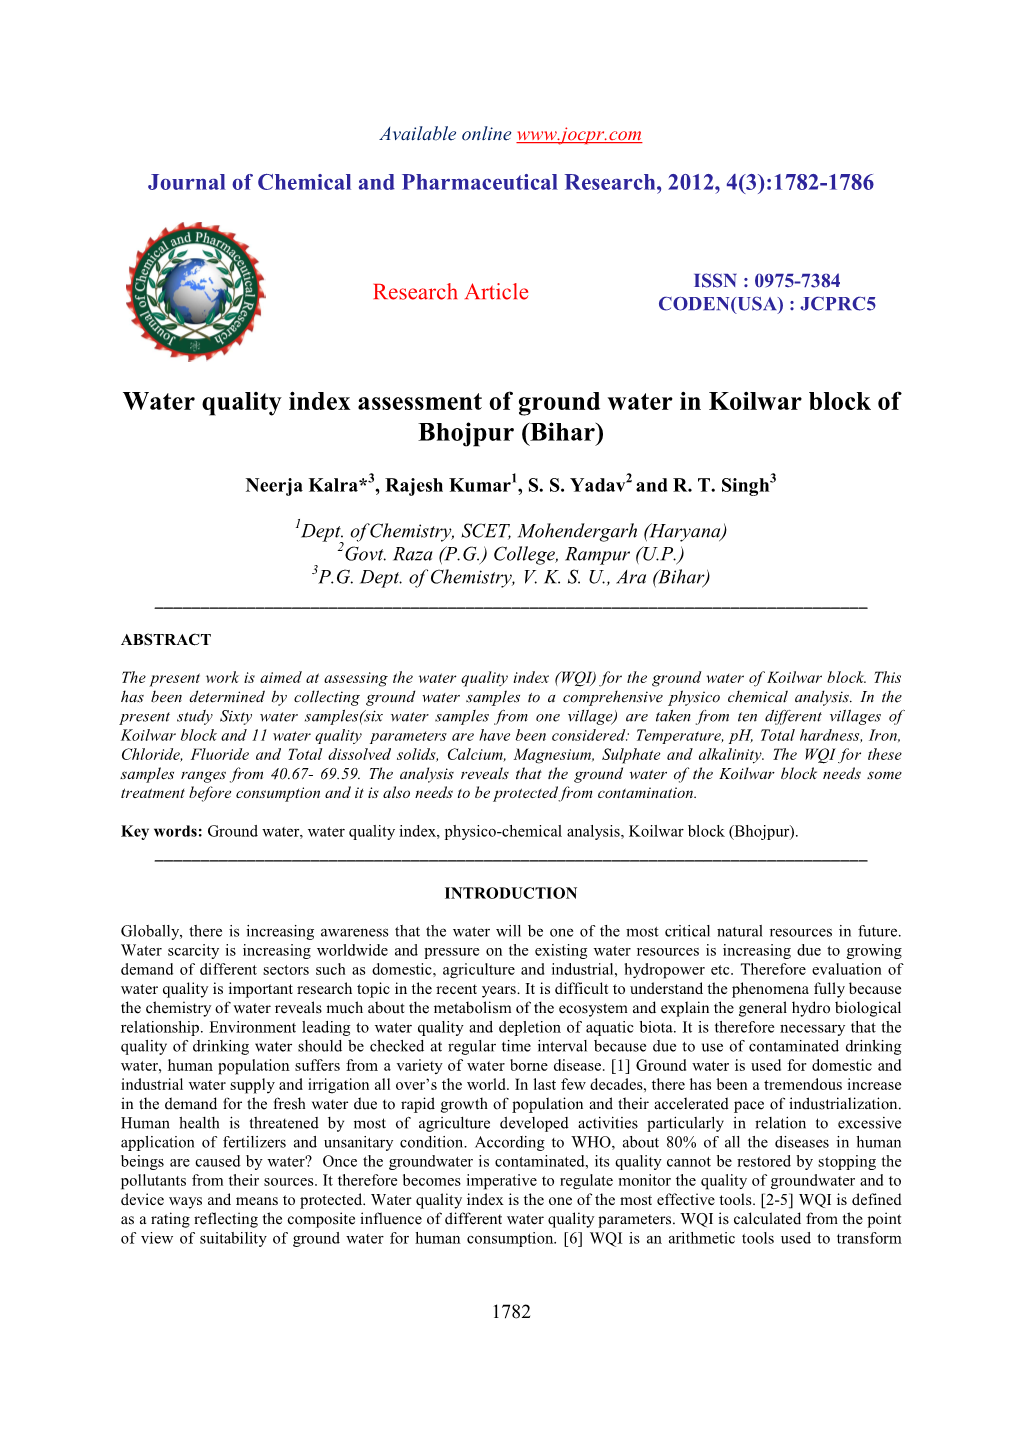 Water Quality Index Assessment of Ground Water in Koilwar Block of Bhojpur (Bihar)